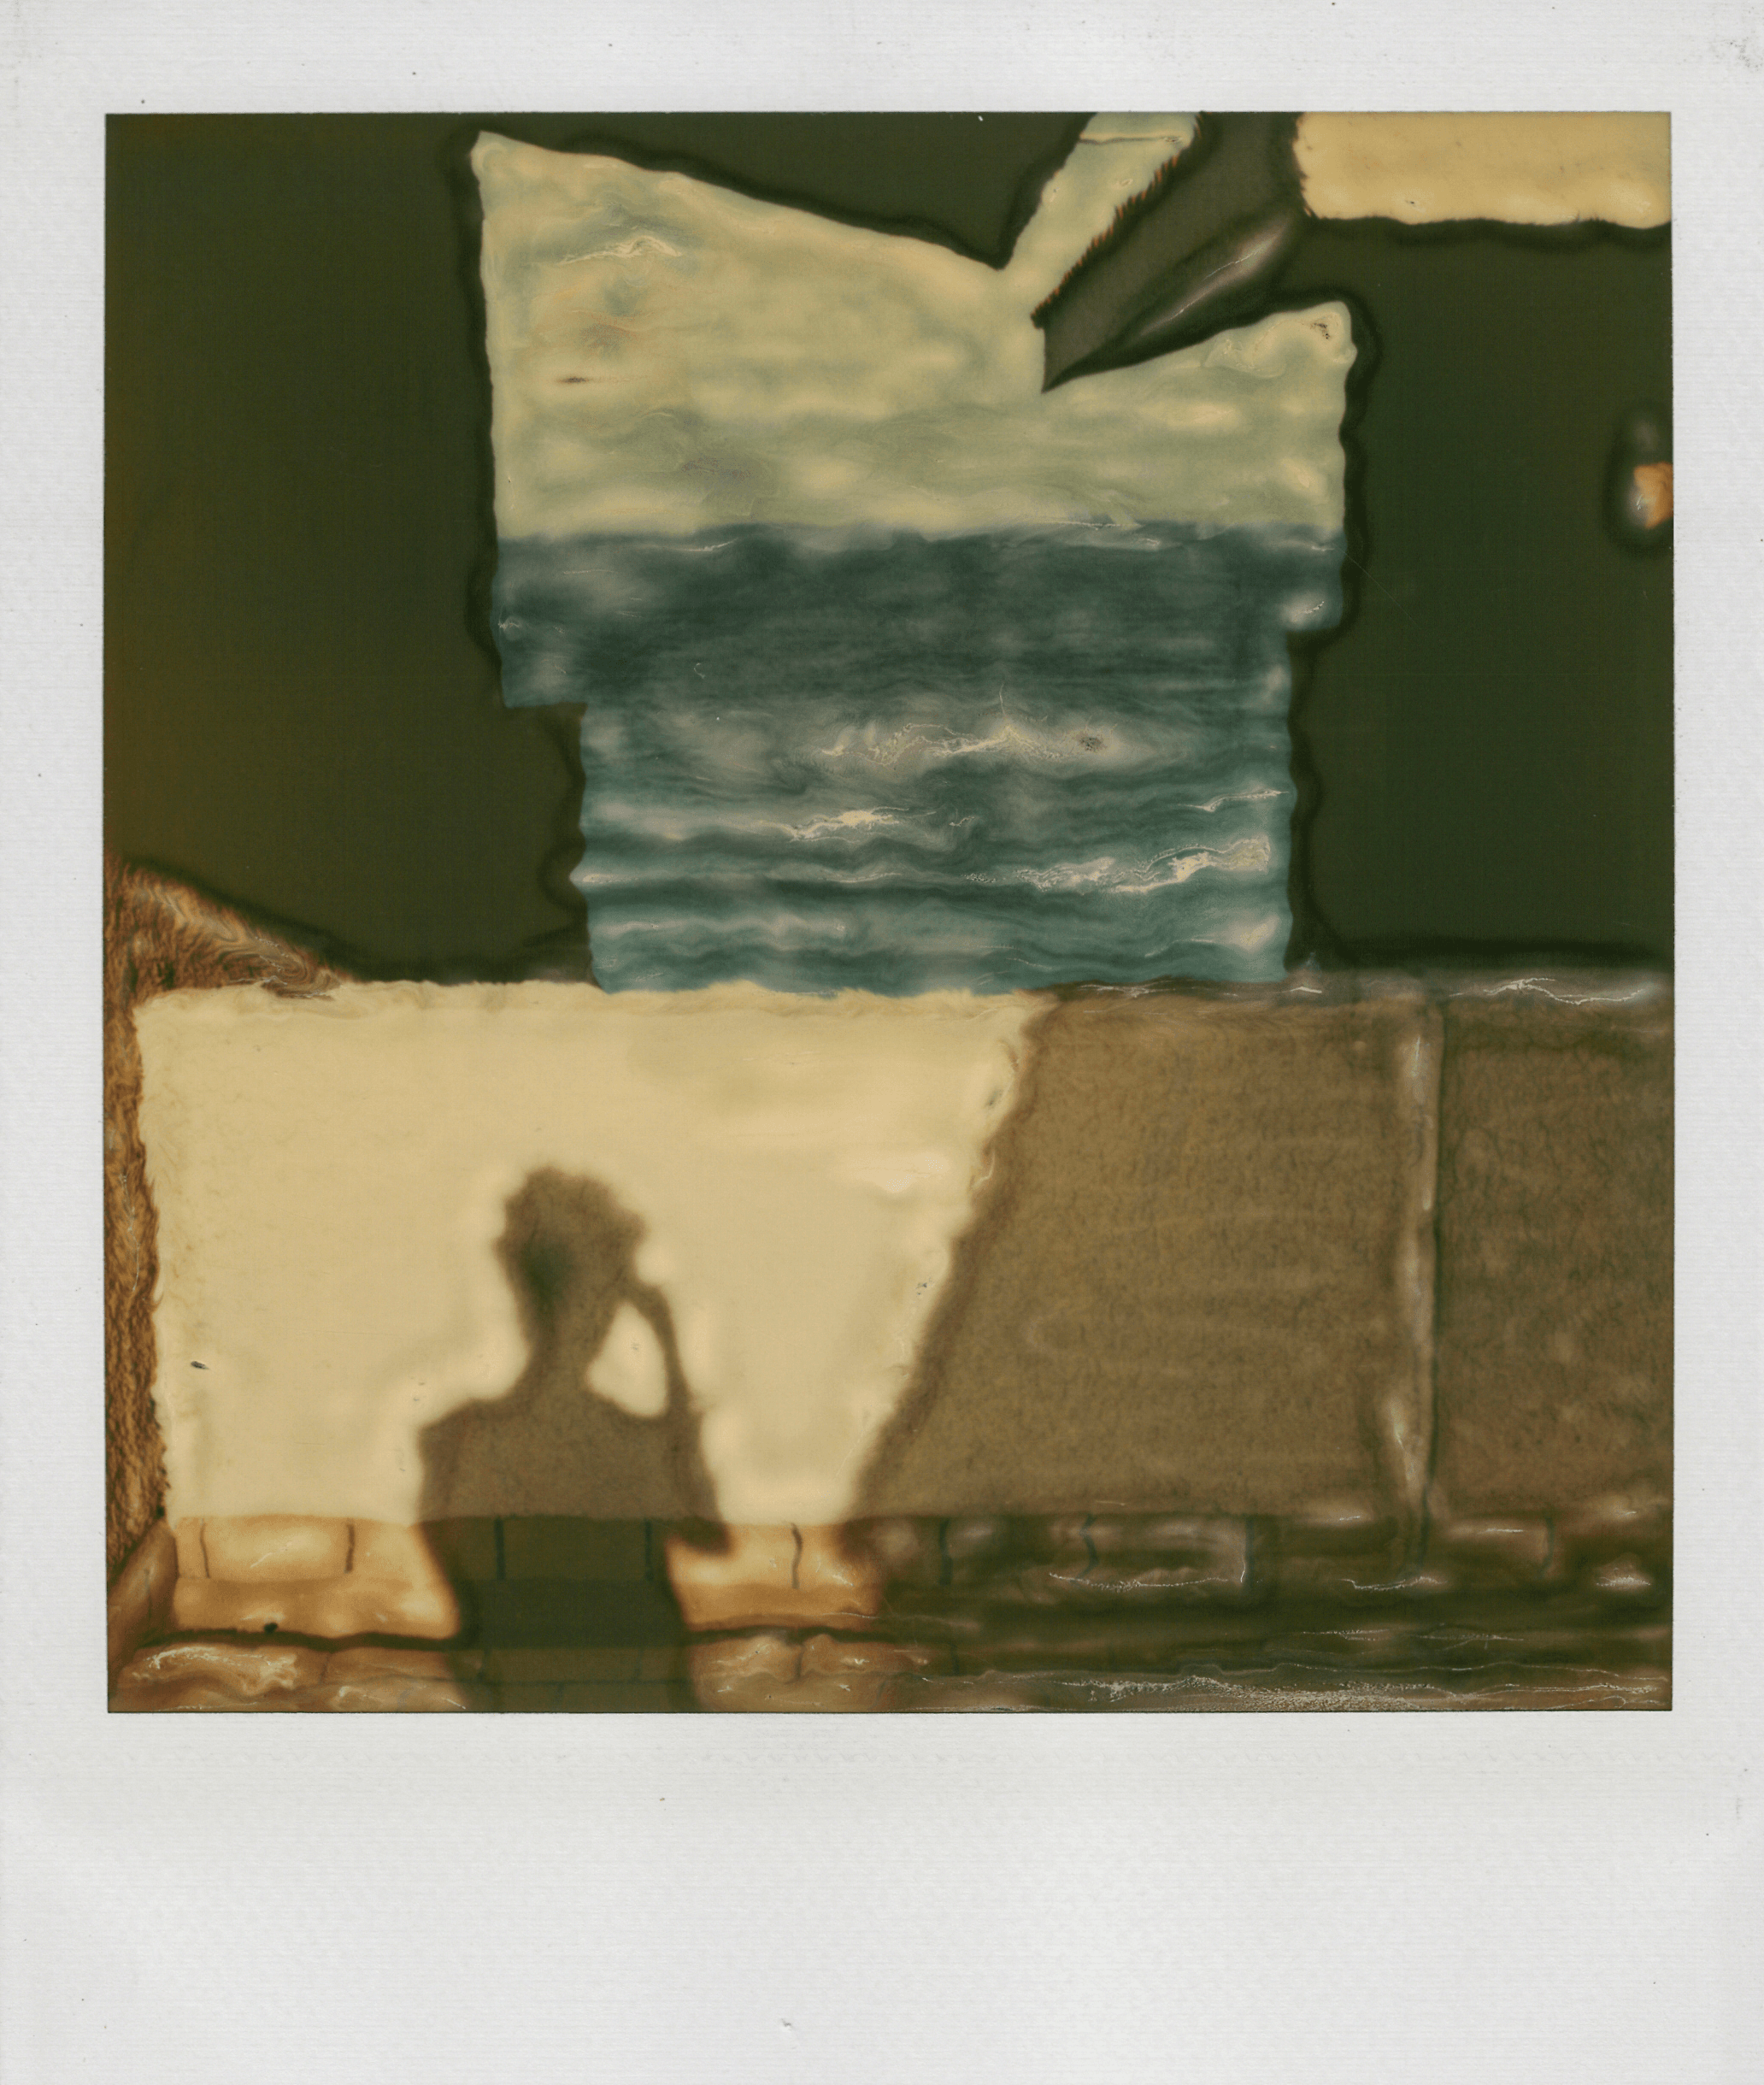 Self-Portrait / Polaroid SX-70 photo manipulation